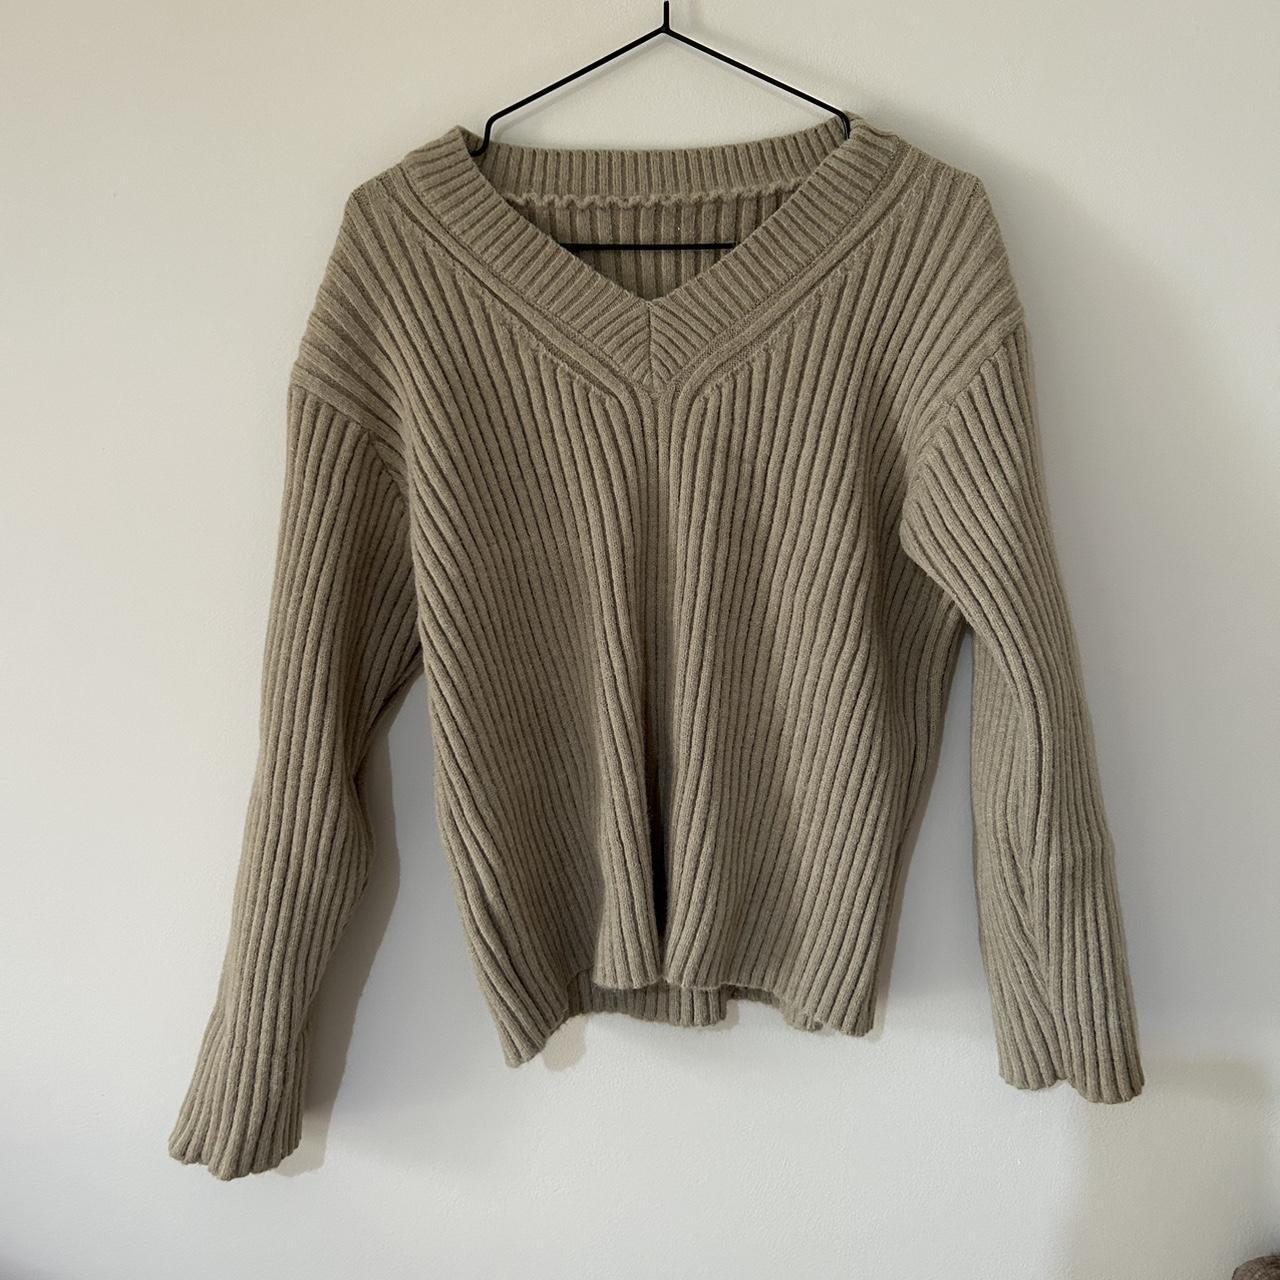 Brand Unknown - Oversized sweater top/jumper. Size... - Depop